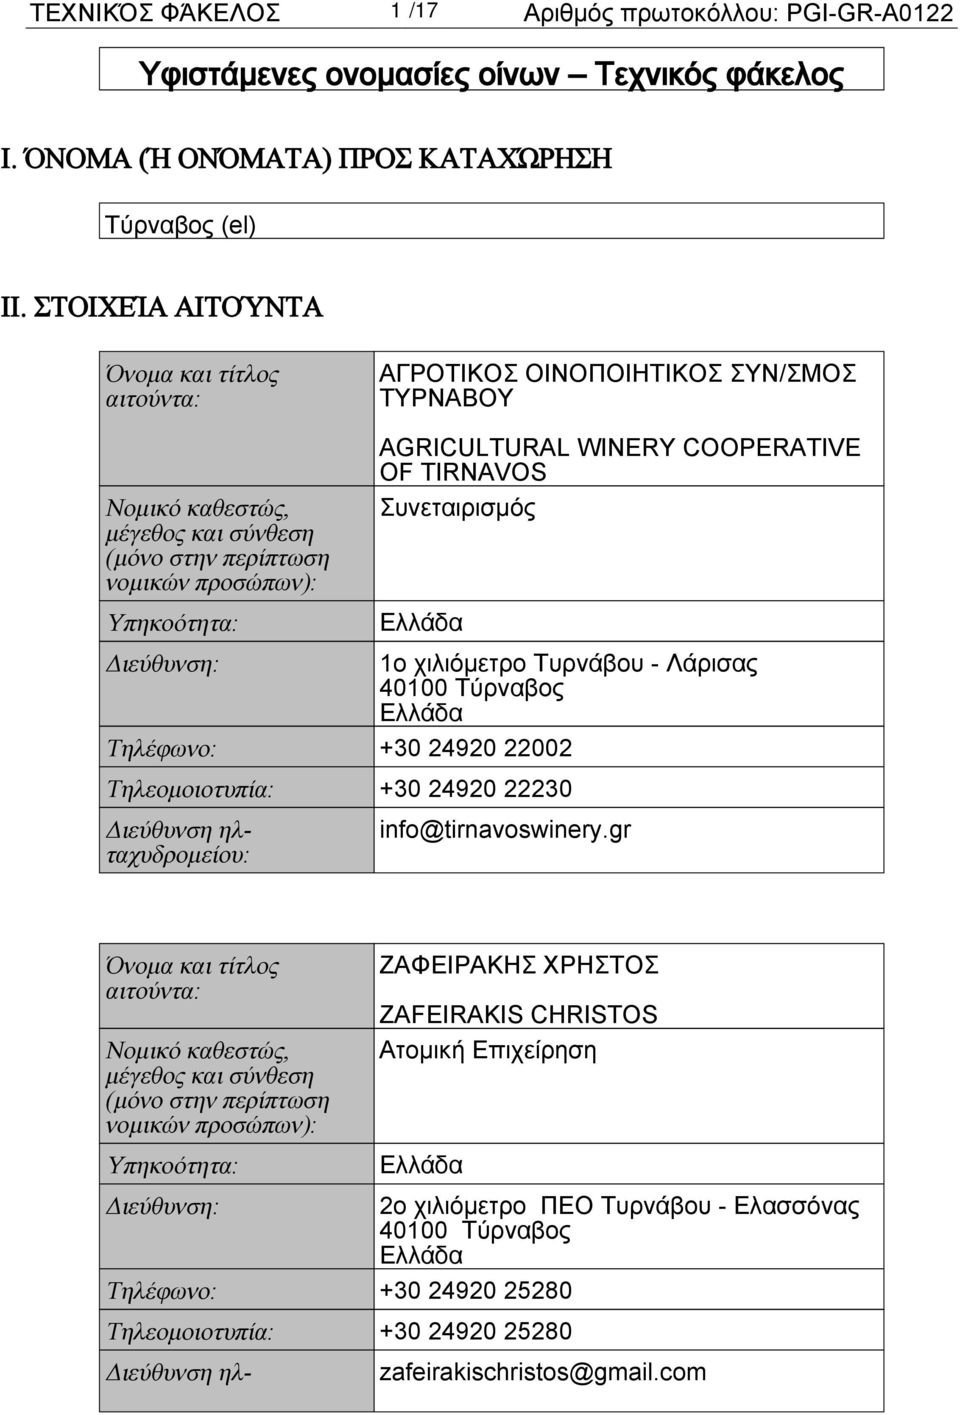 COOPERATIVE OF TIRNAVOS Συνεταιρισμός Διεύθυνση: 1o χιλιόμετρο Τυρνάβου - Λάρισας 40100 Τύρναβος Τηλέφωνο: +30 24920 22002 Τηλεομοιοτυπία: +30 24920 22230 Διεύθυνση ηλταχυδρομείου: